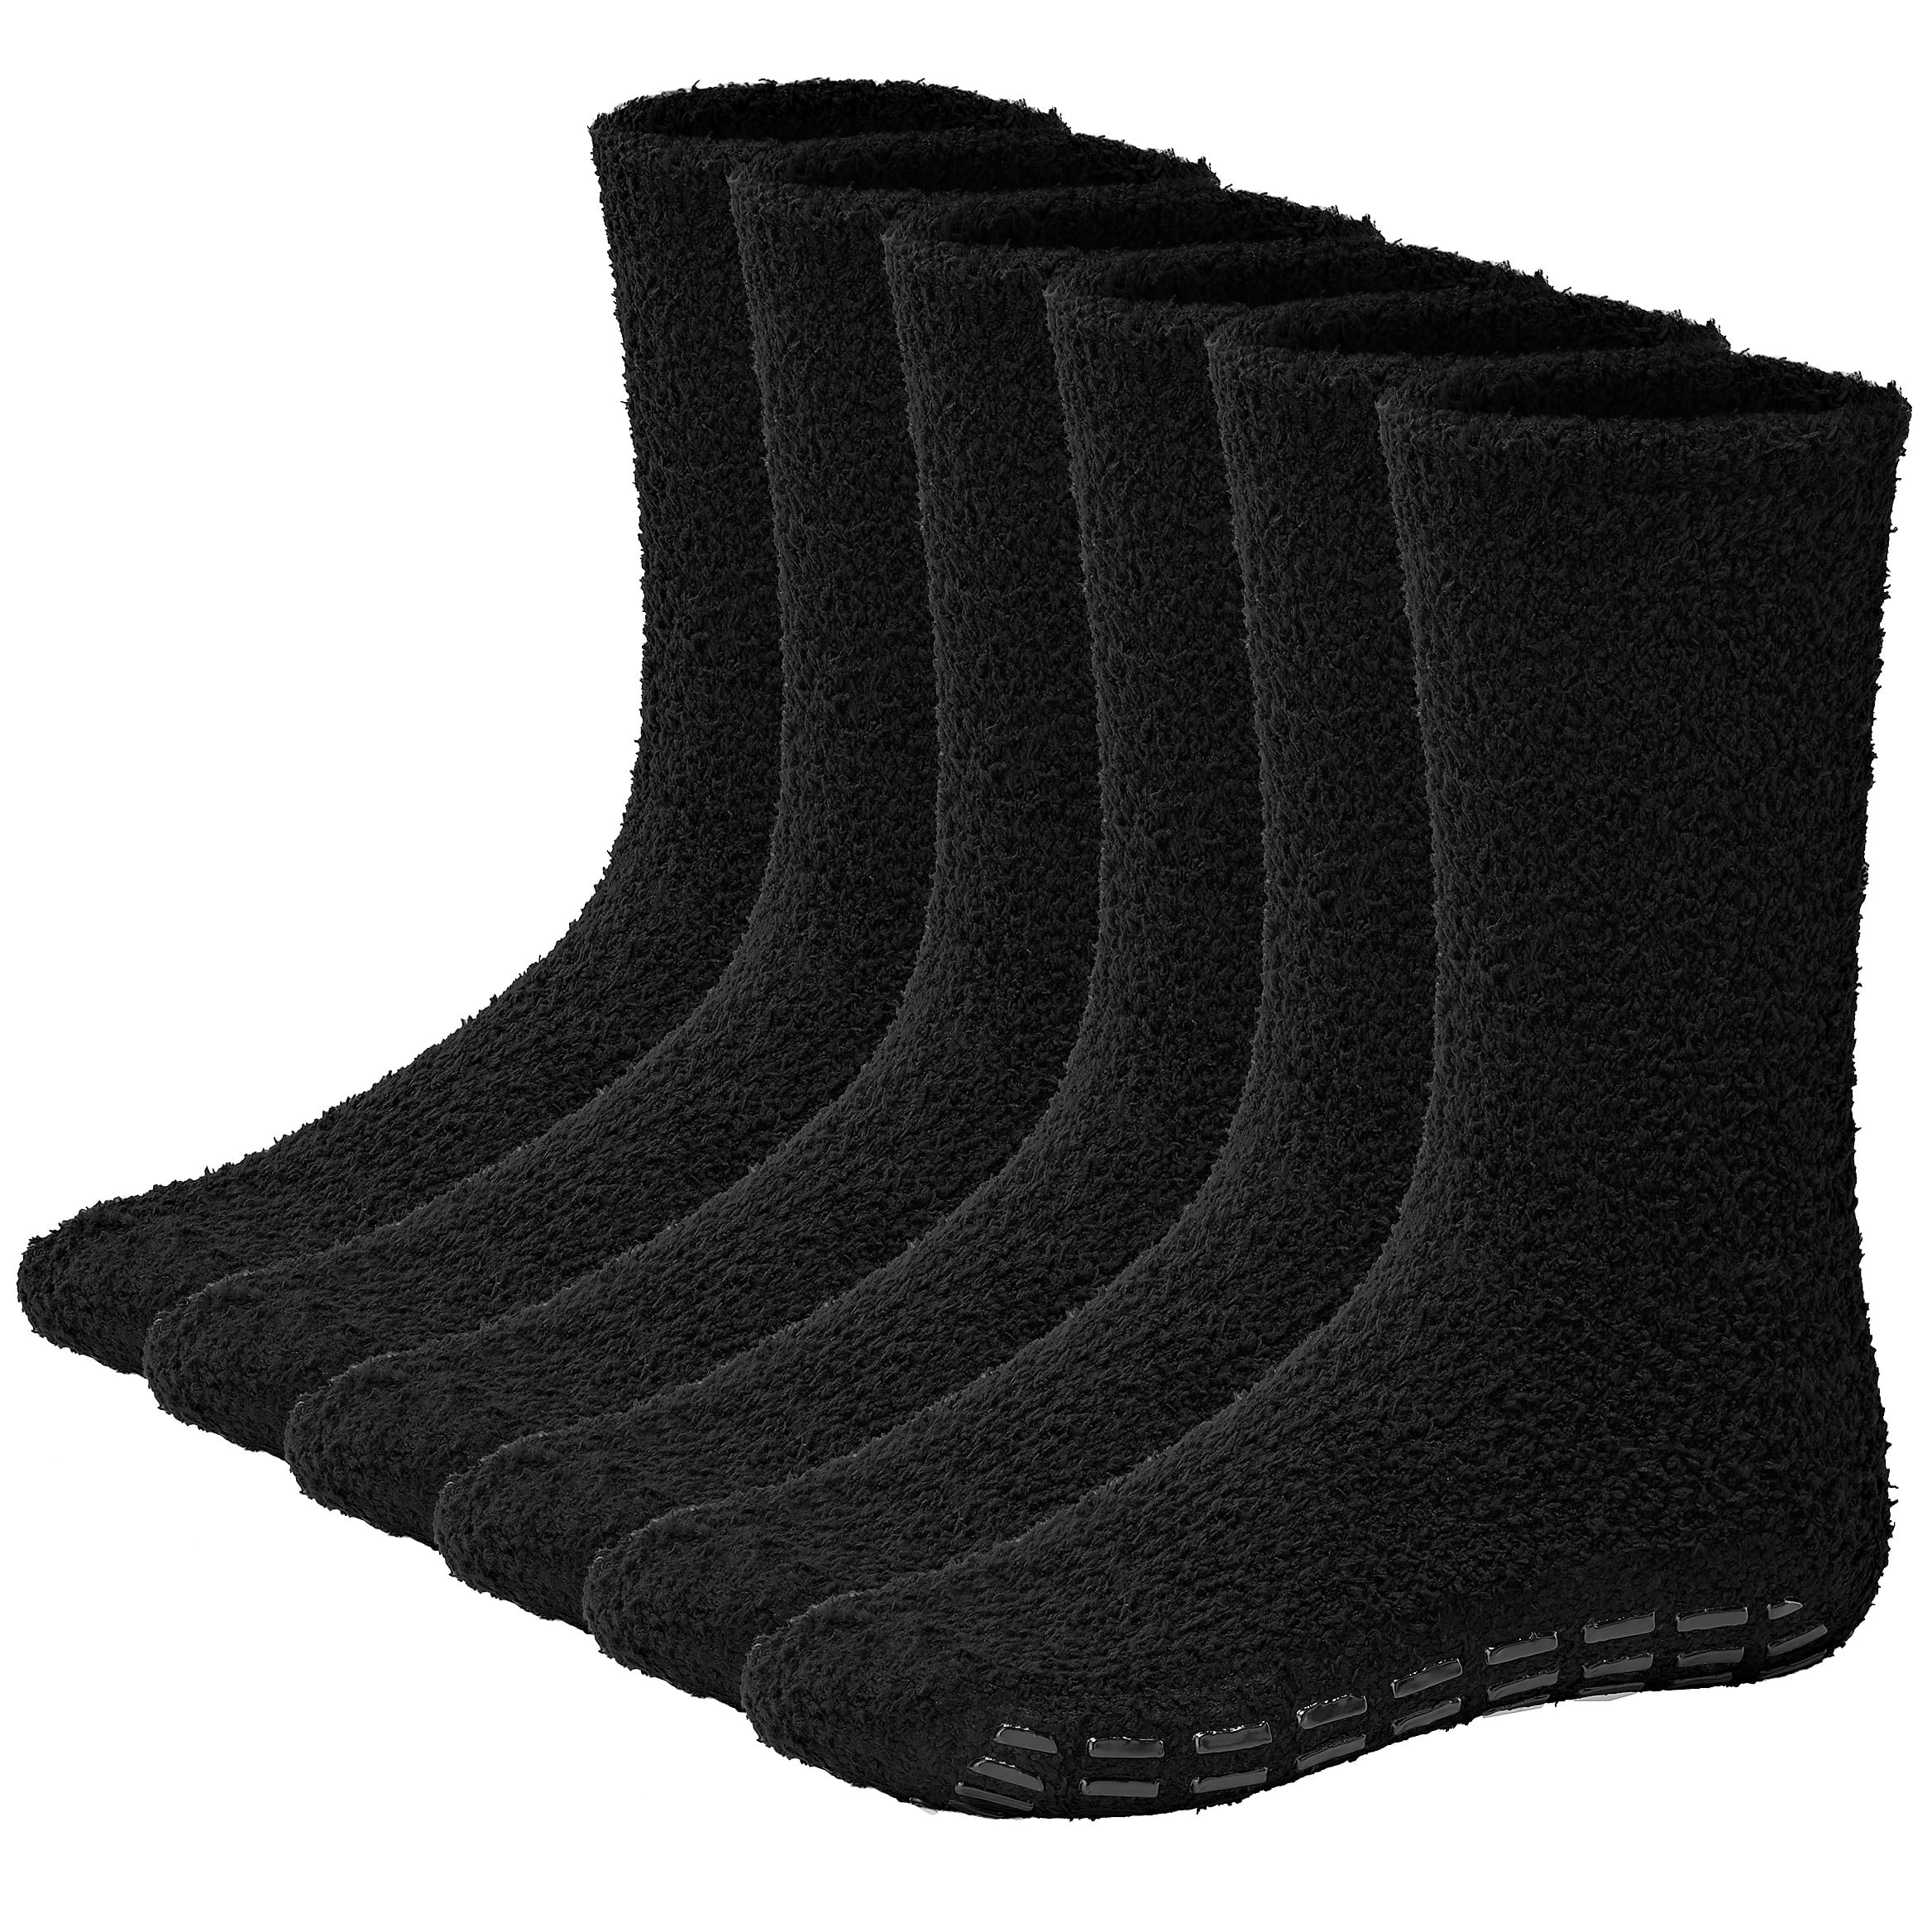 Warm Fuzzy Socks Ultra Soft Mens 6-Pack Assorted By Debra Weitzner 